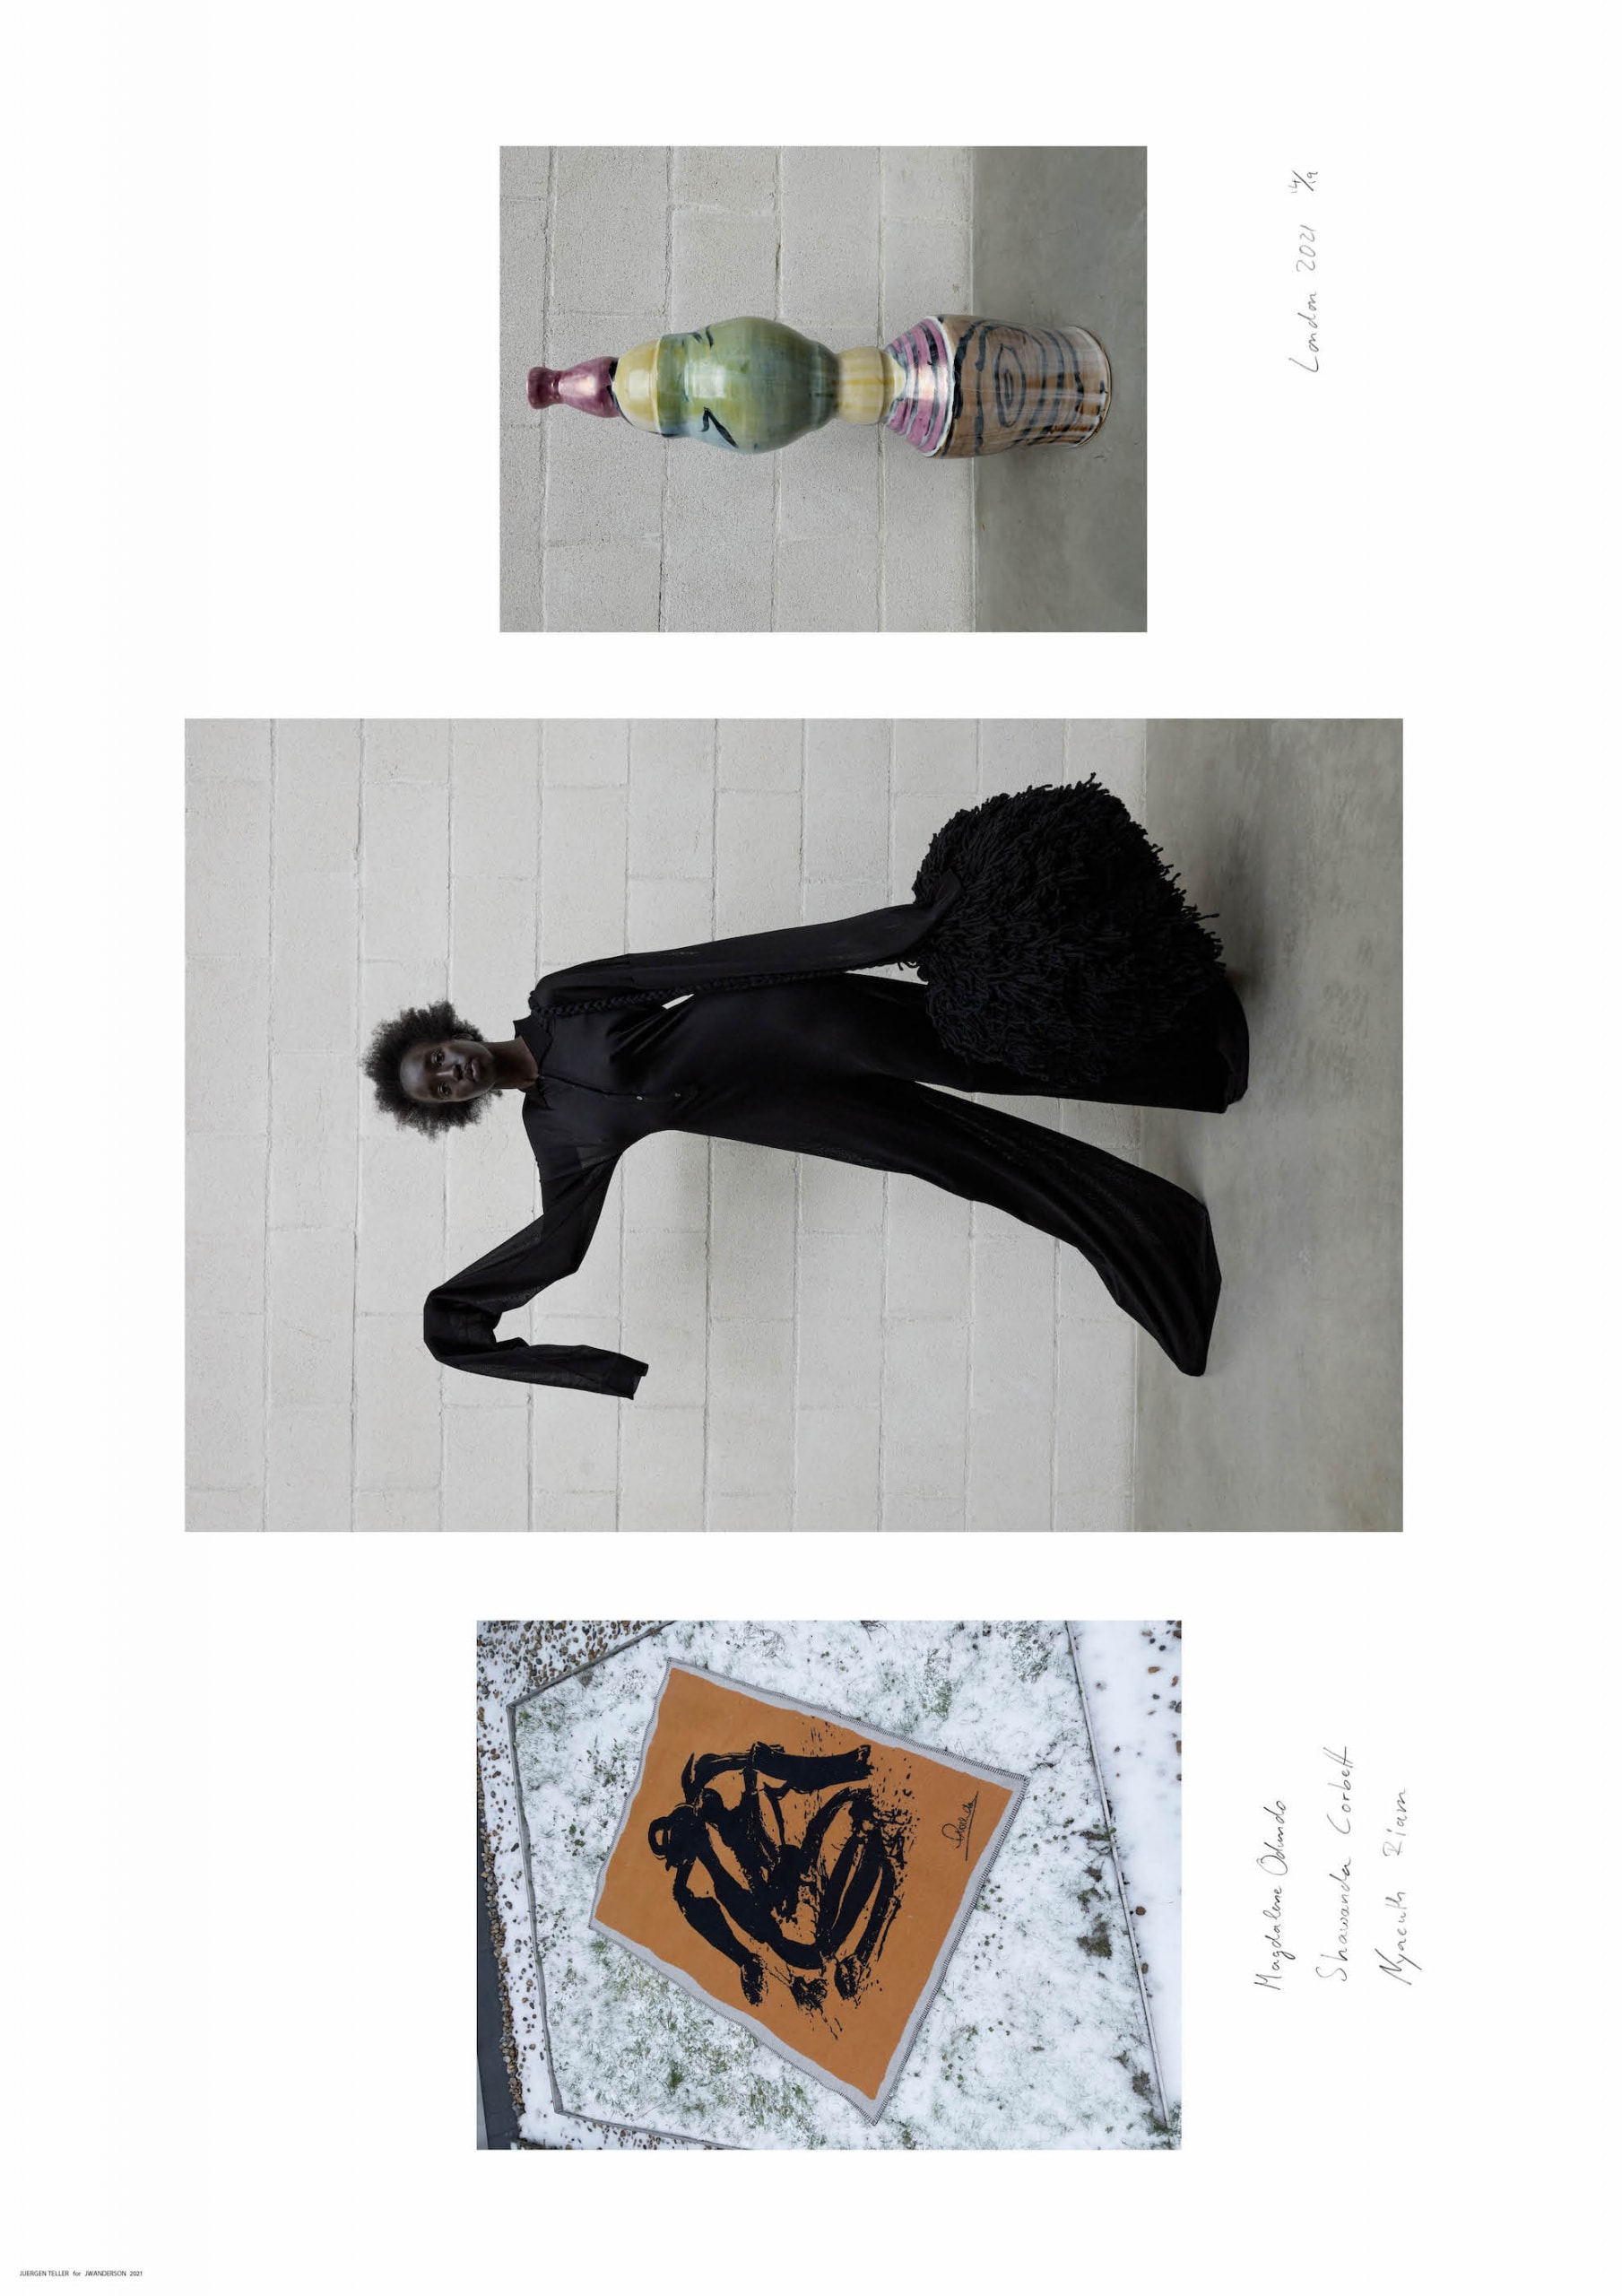 JW Anderson Fall/Winter 2021 Collection Presentation Juregen Teller Photography Posters Artist Collaborations